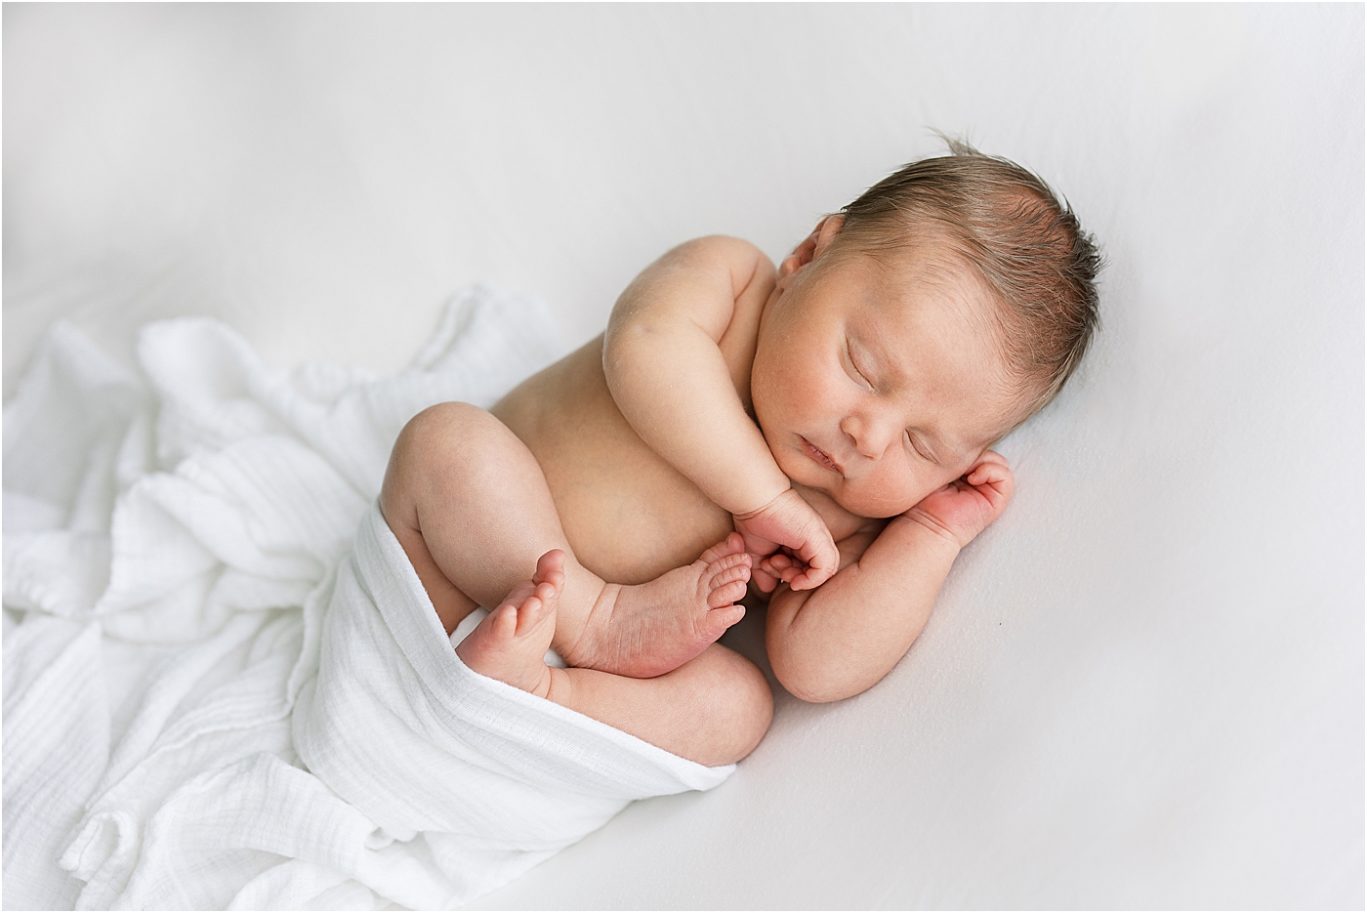 Classic studio newborn session with Bloomington Newborn Photographer, Lindsay Konopa Photography.